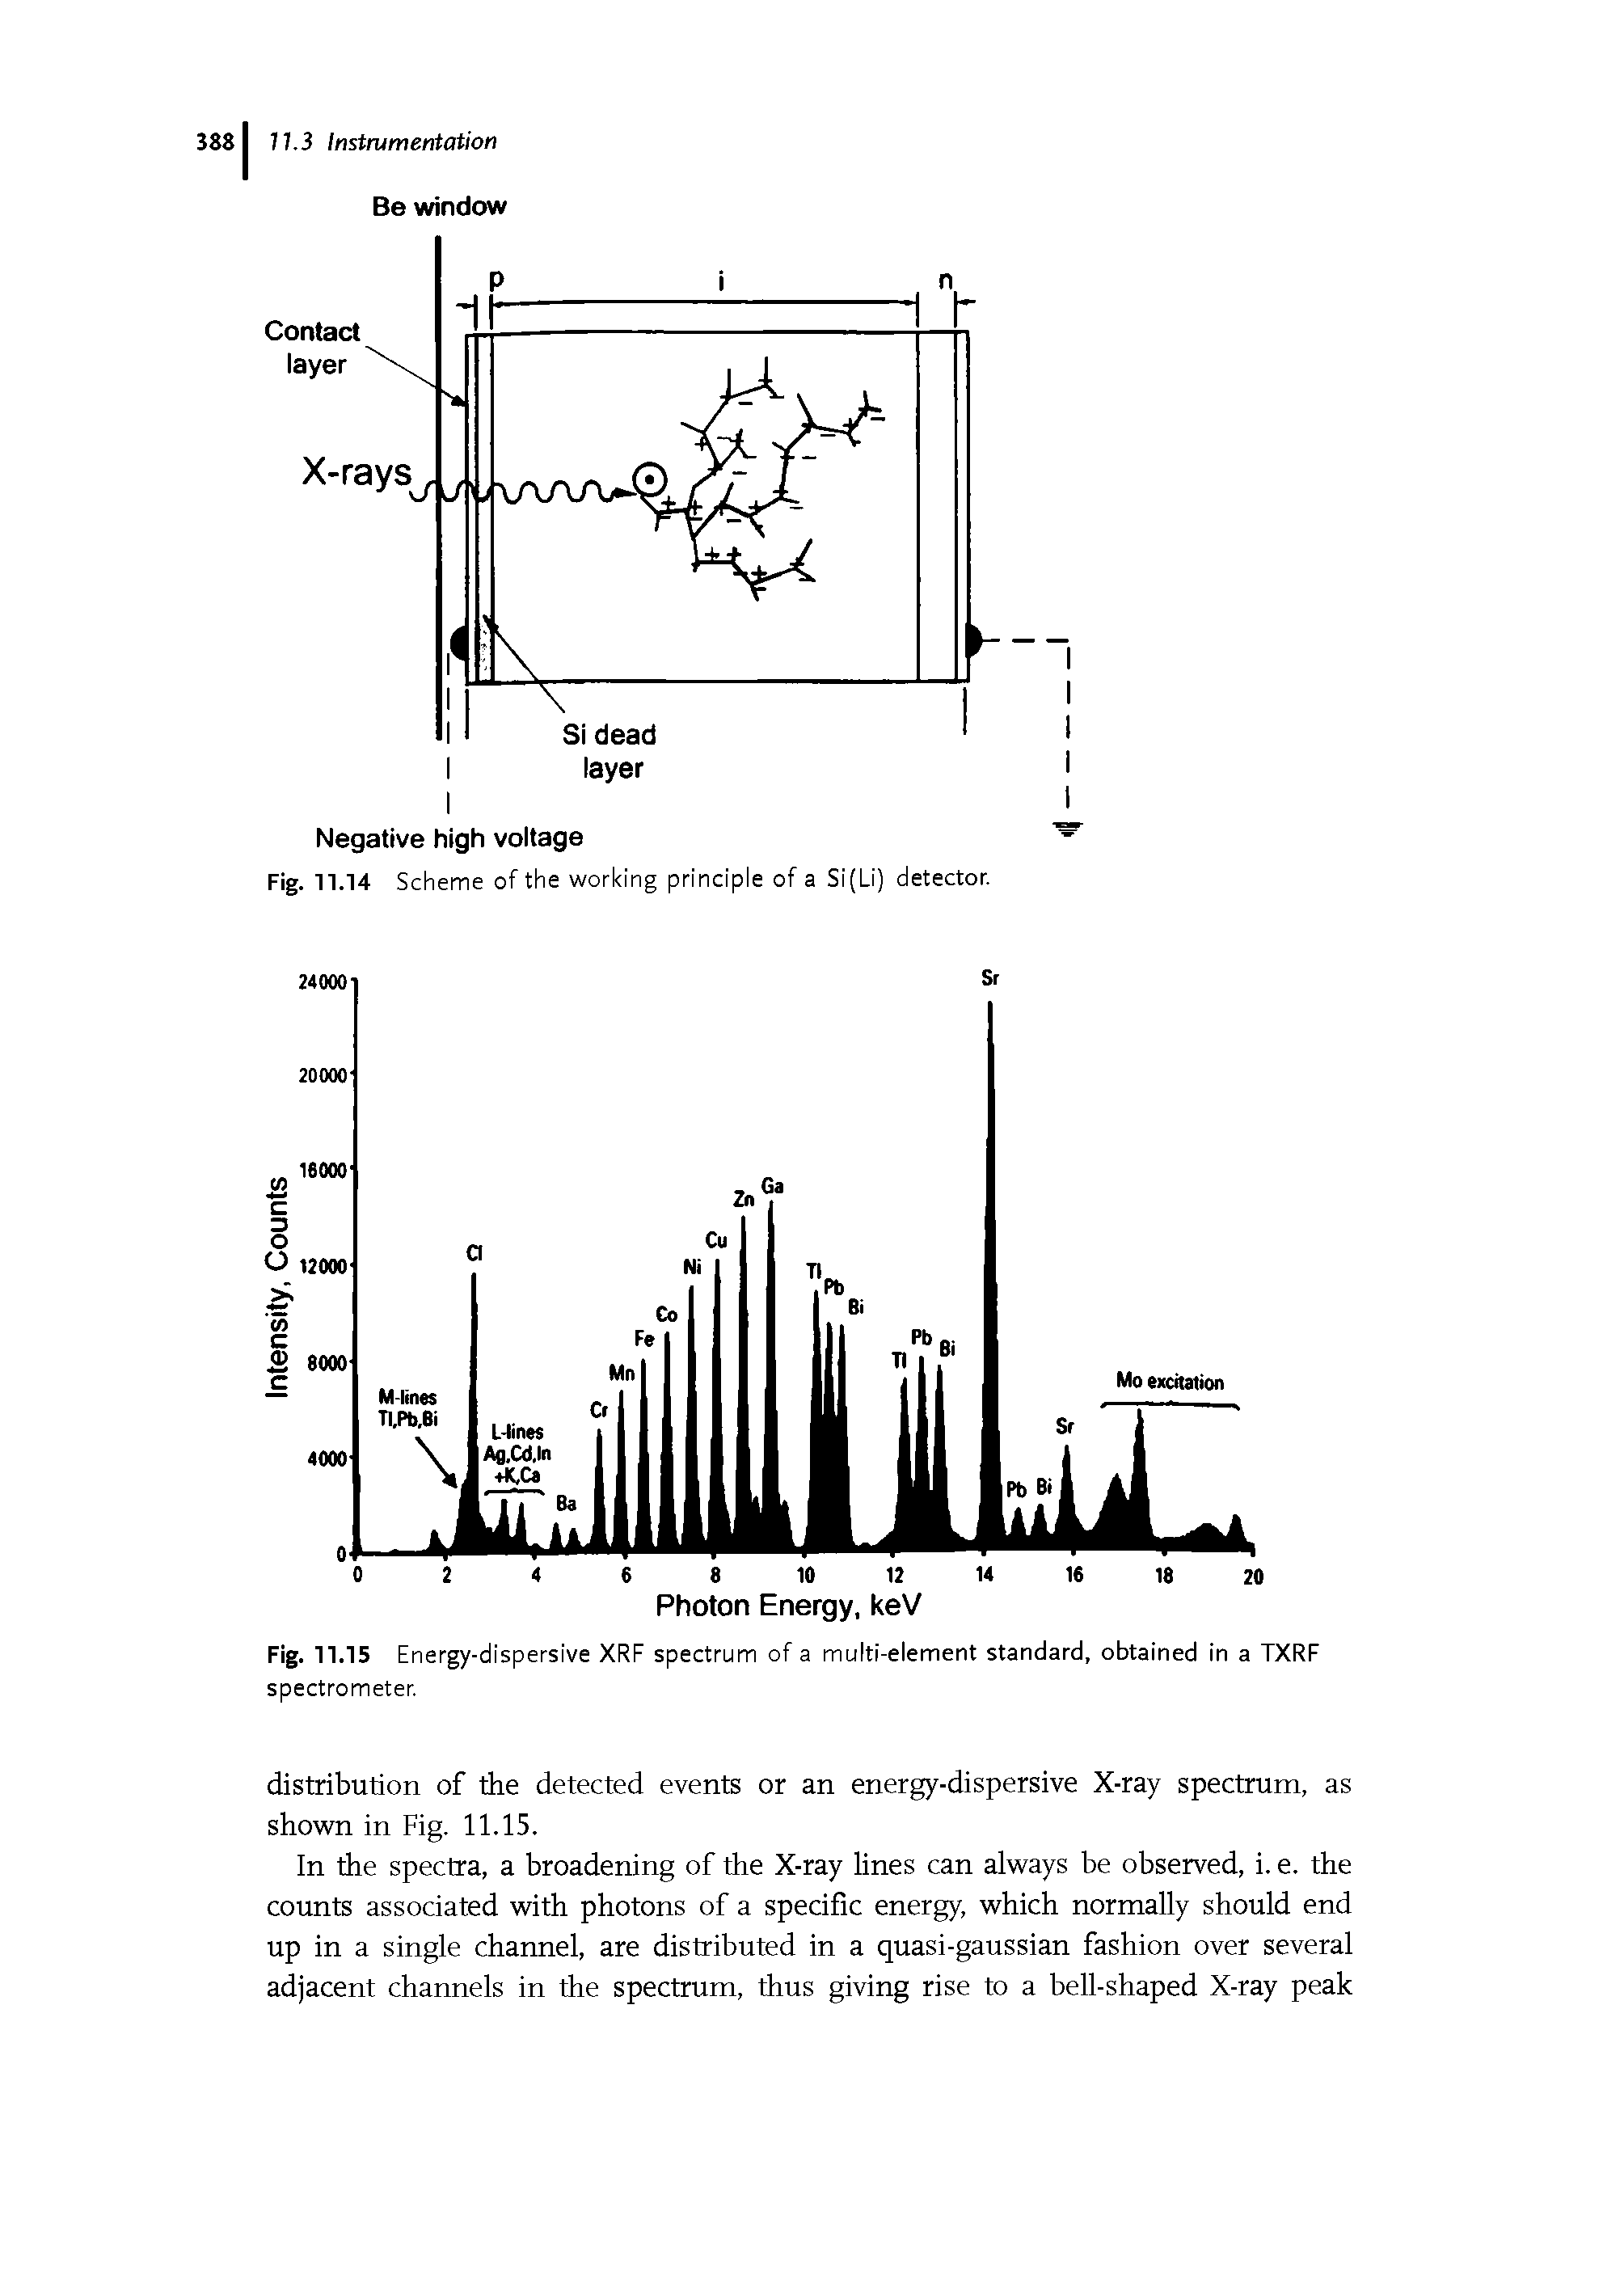 Fig. 11.15 Energy-dispersive XRF spectrum of a multi-element standard, obtained in a TXRF spectrometer.